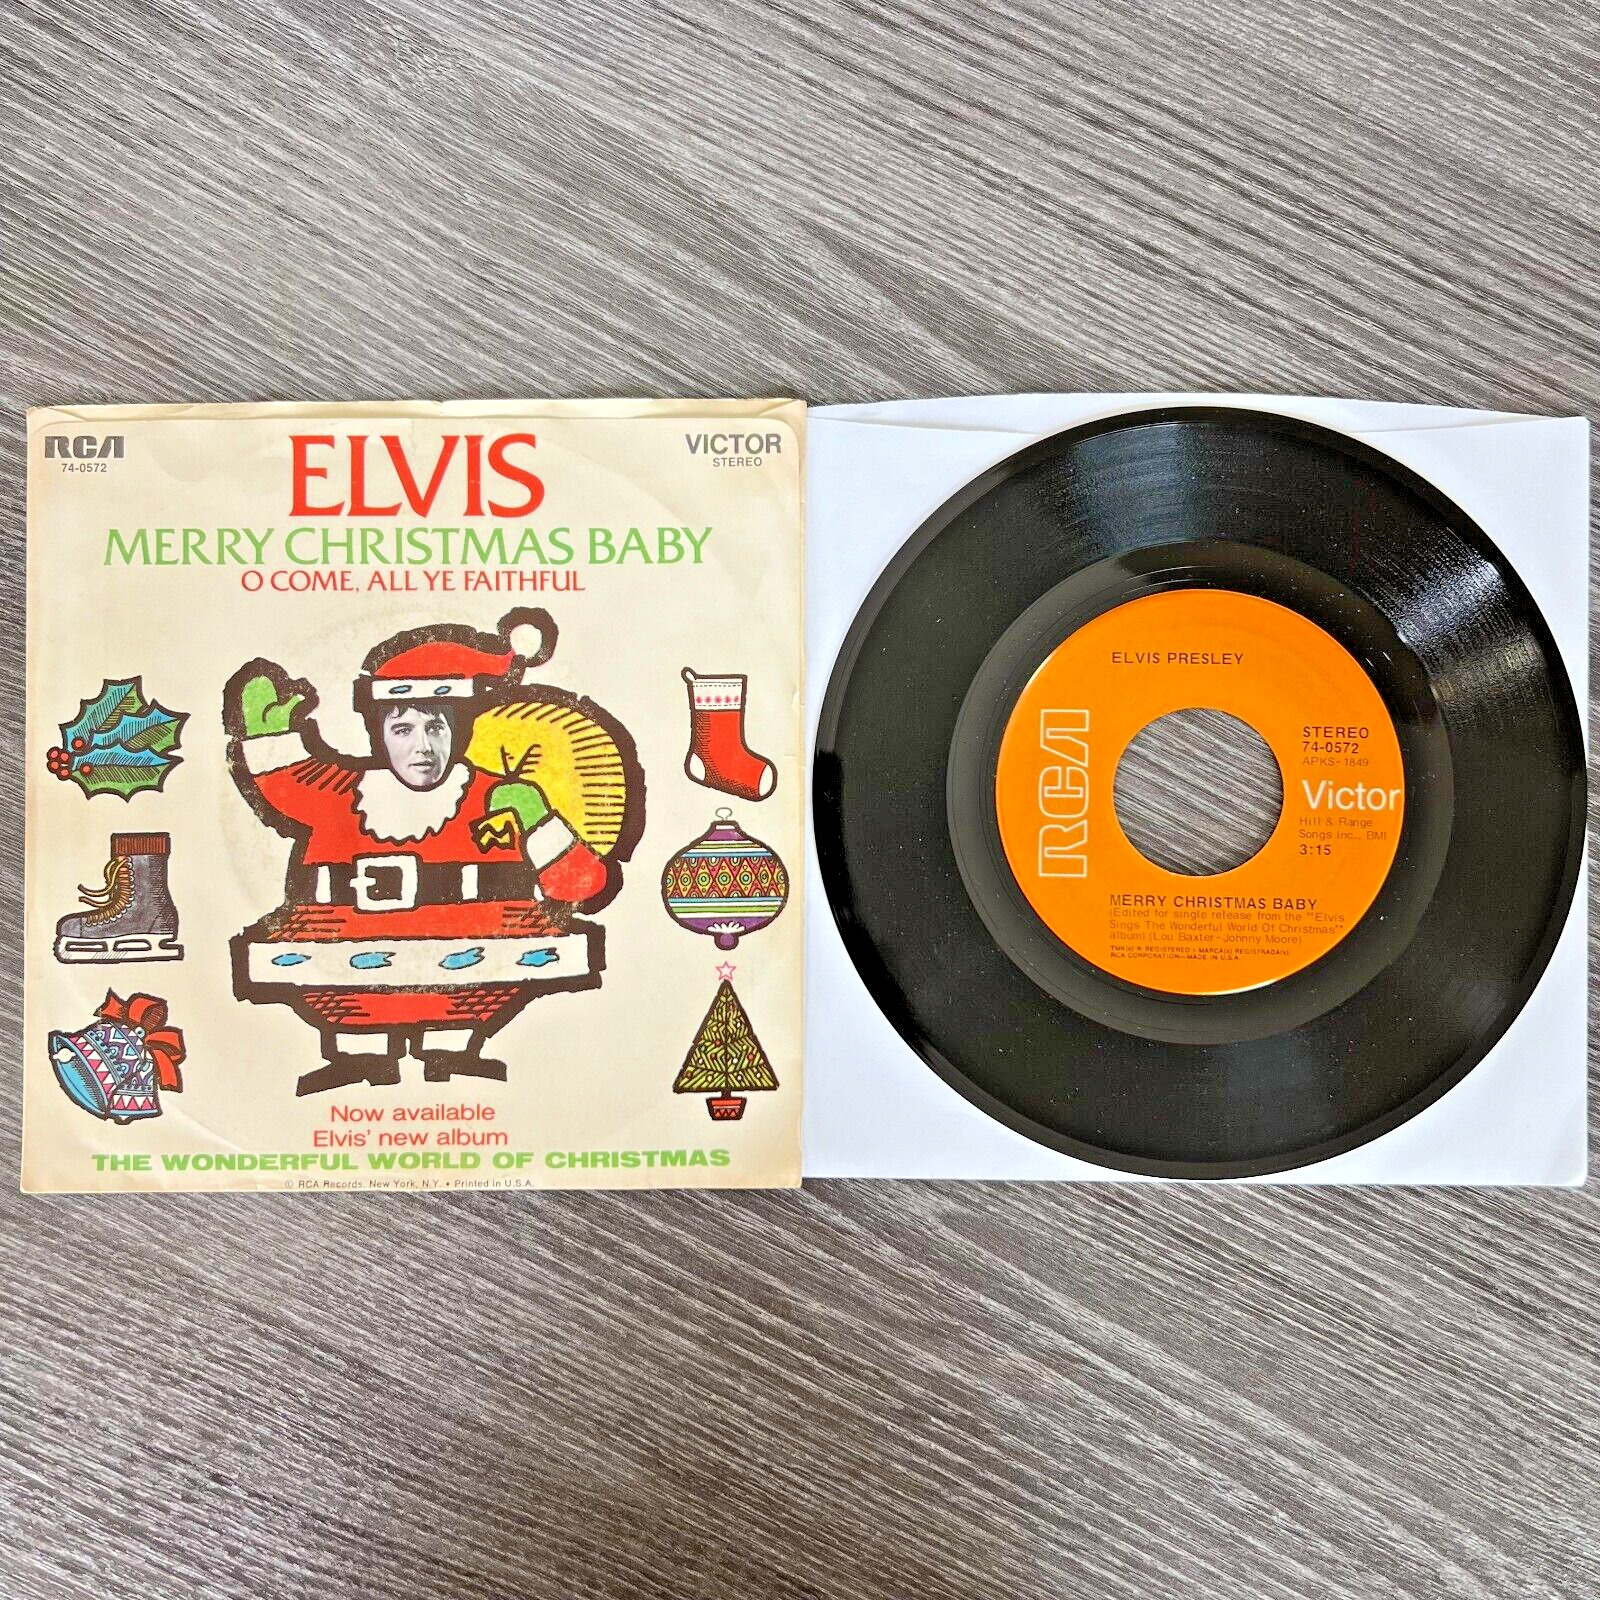 RARE Elvis Presley Merry Christmas Baby 45 RCA Victor 74-0572 1971 VG/NM